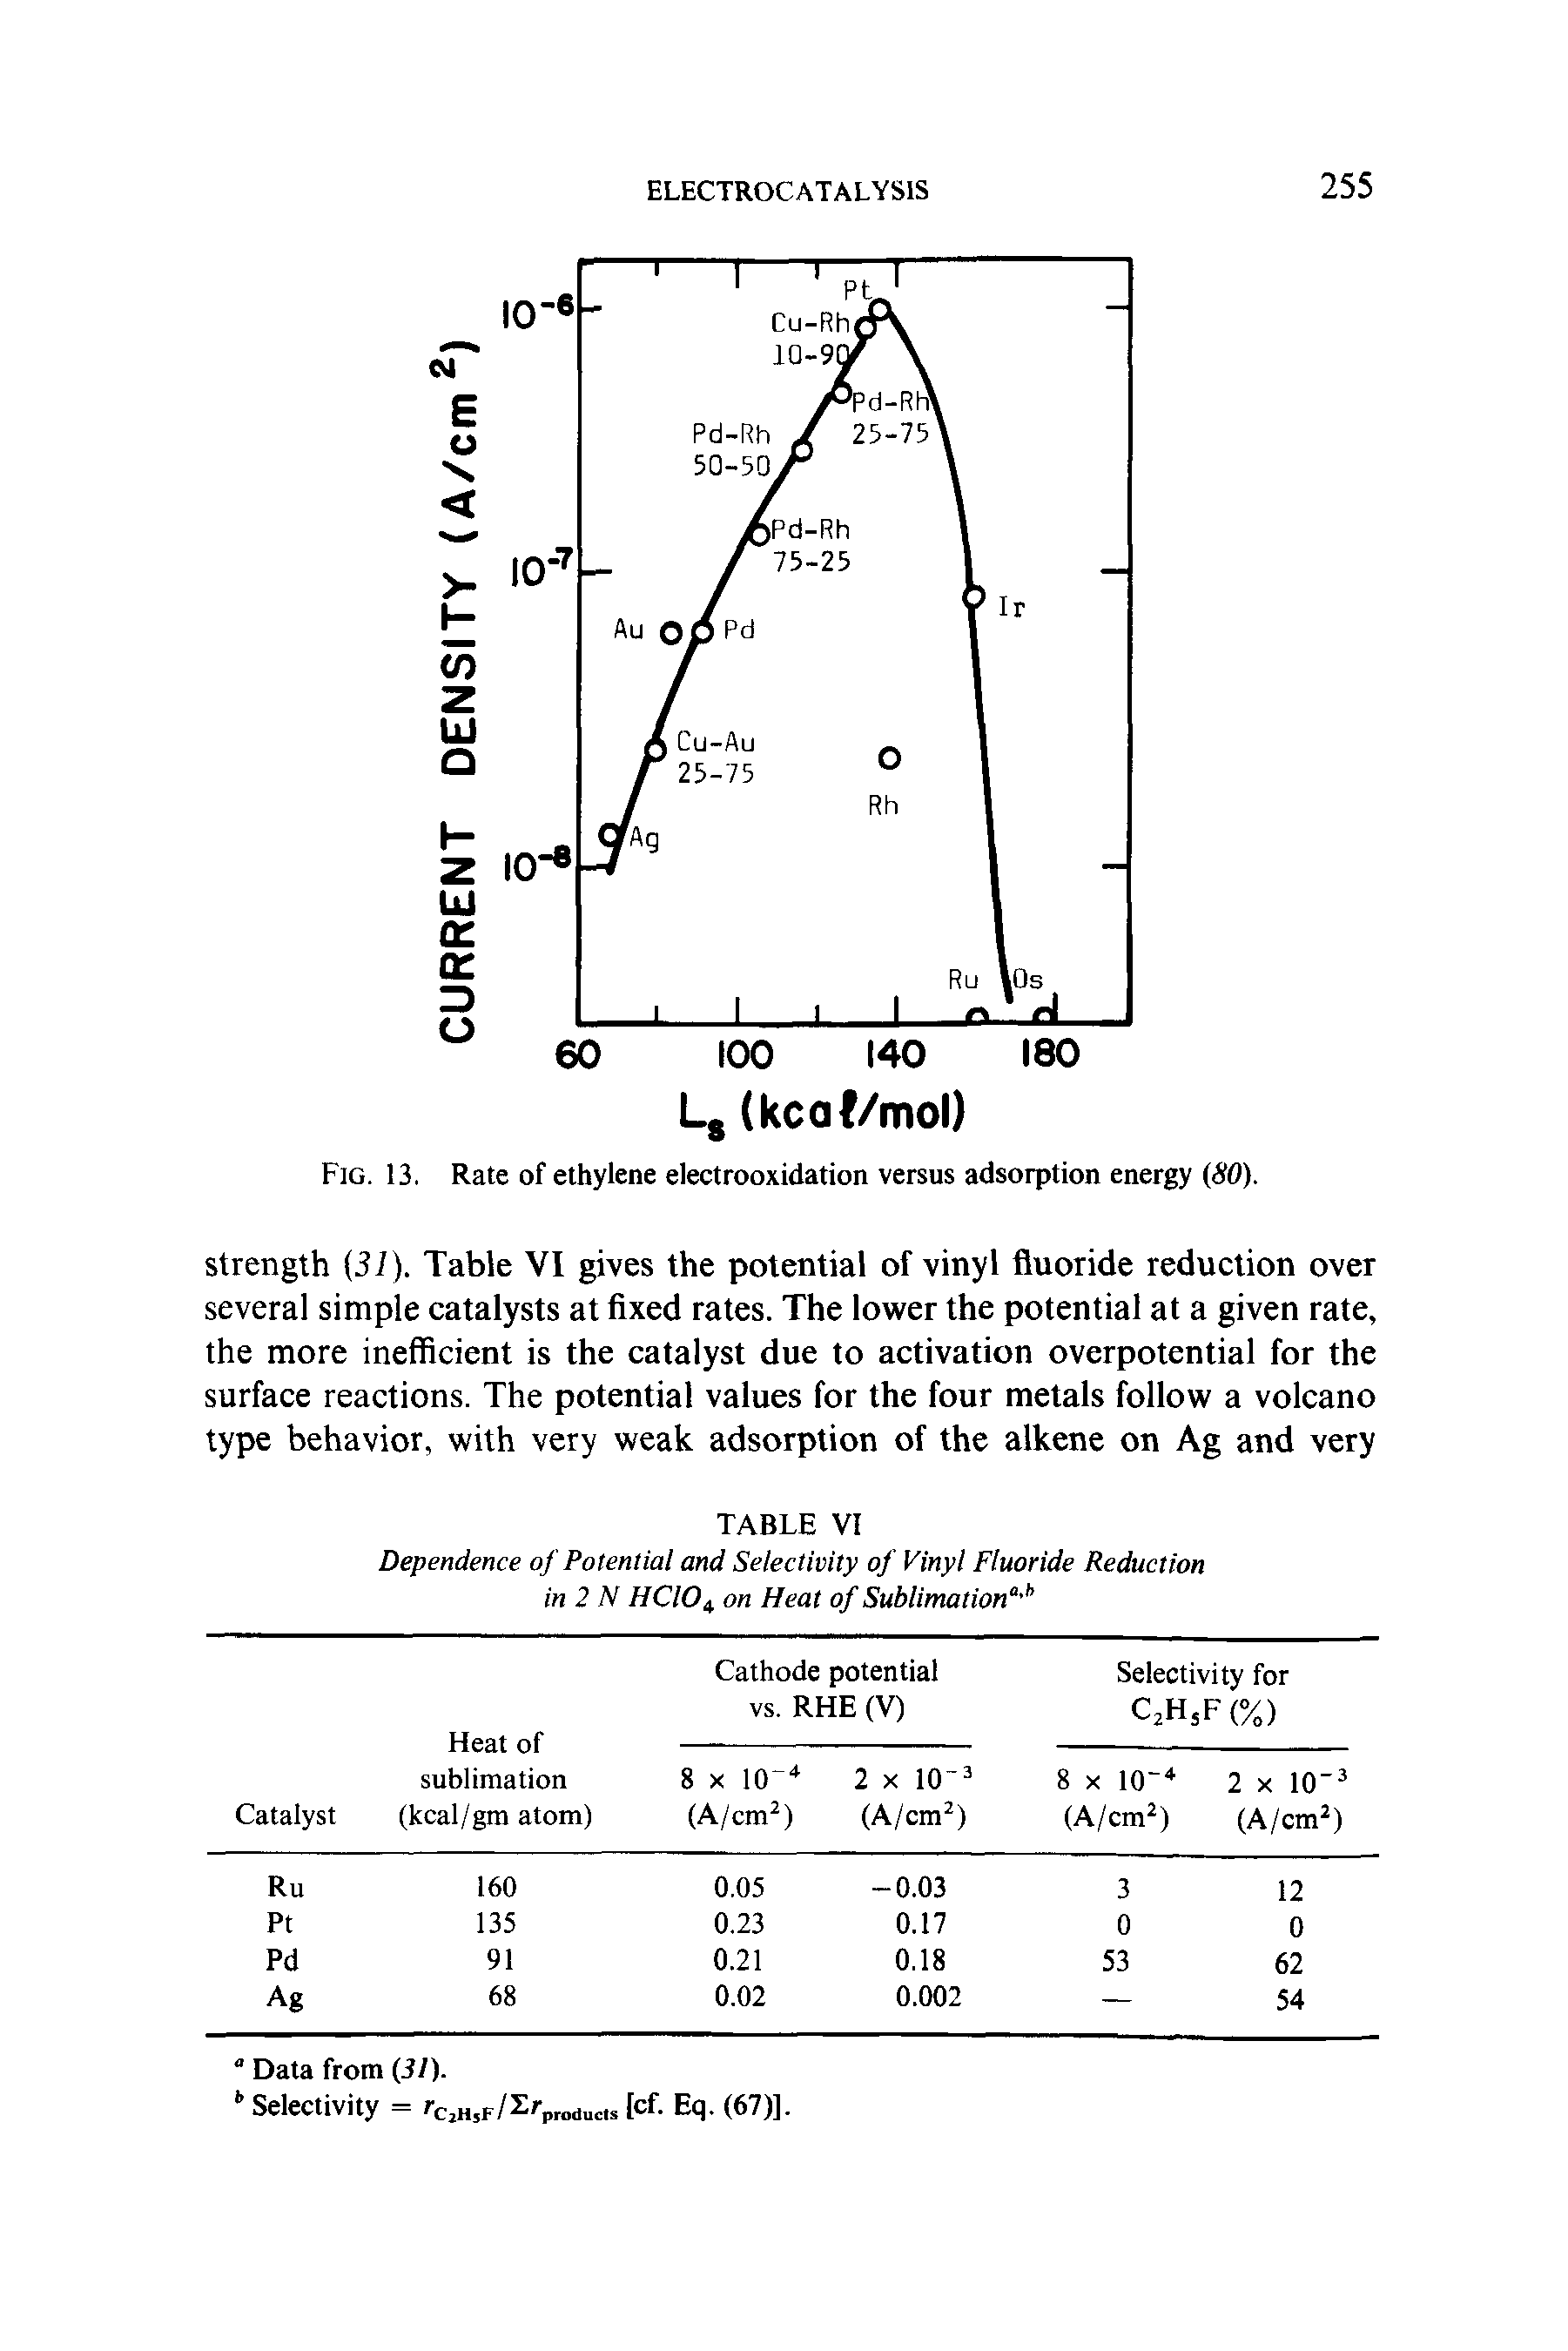 Fig. 13. Rate of ethylene electrooxidation versus adsorption energy (50).